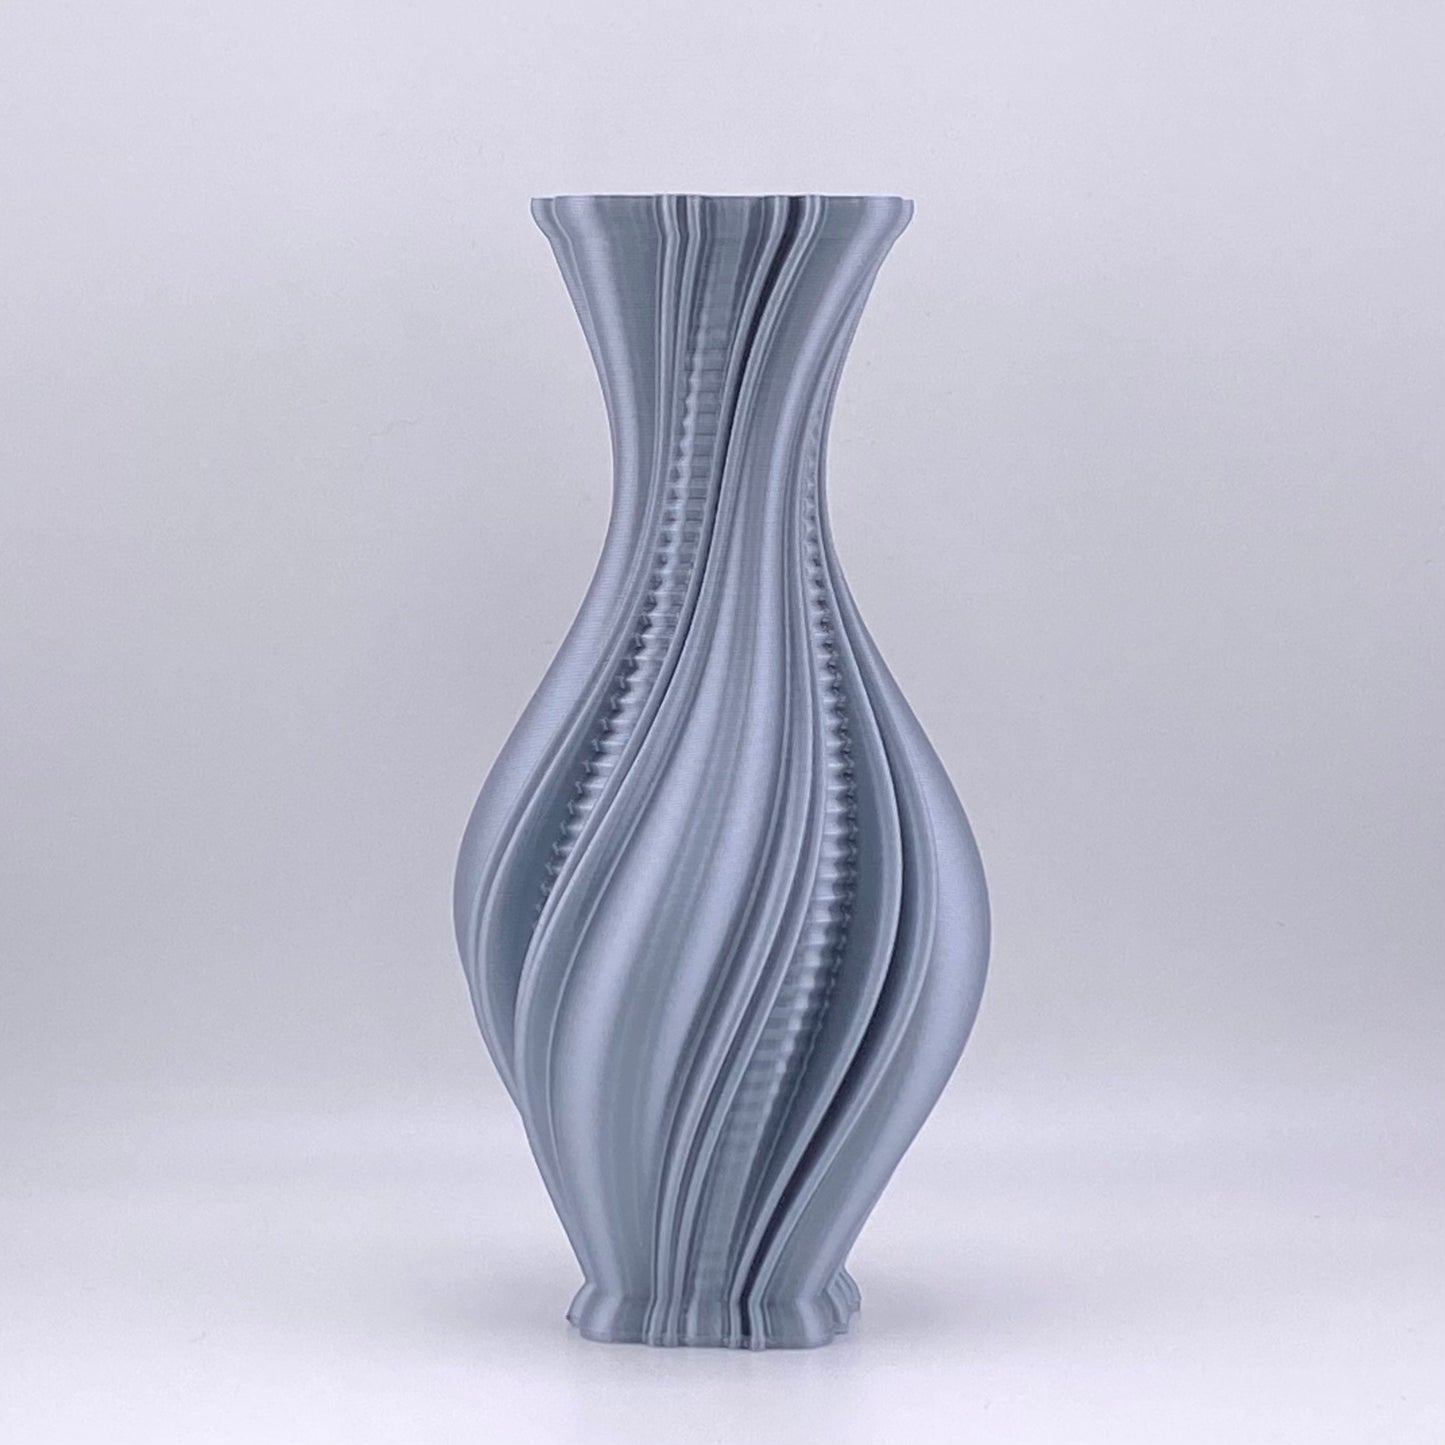 Resplendence Vase 3D printed in Liquid Silver glossy filament